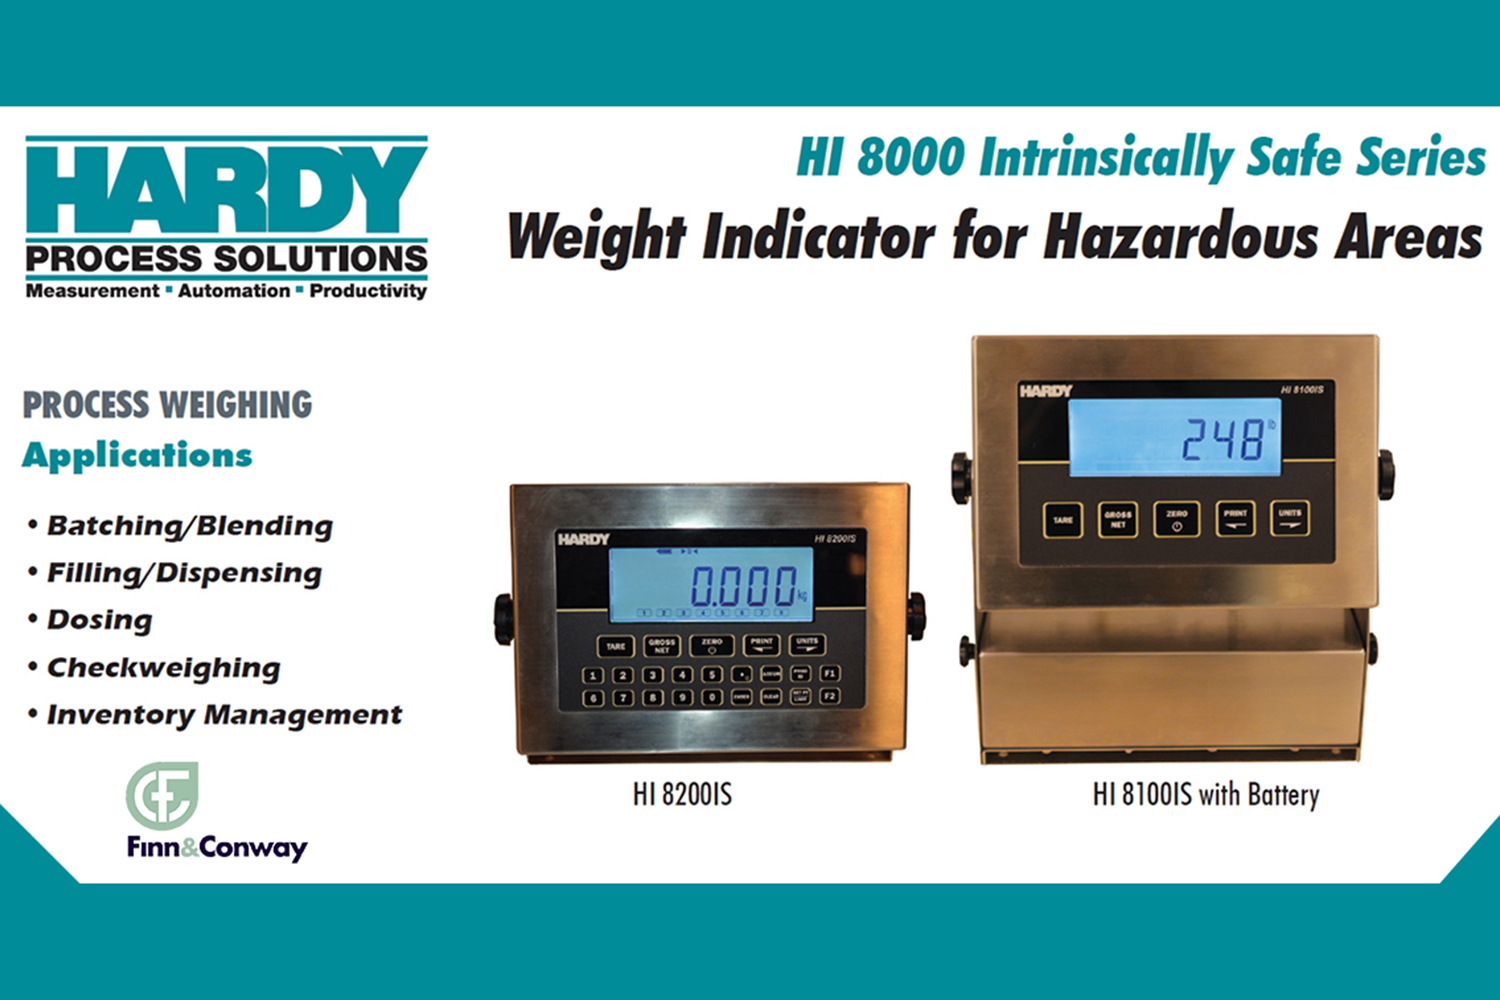 Hardy HI8000 Intrinsically Safe Series